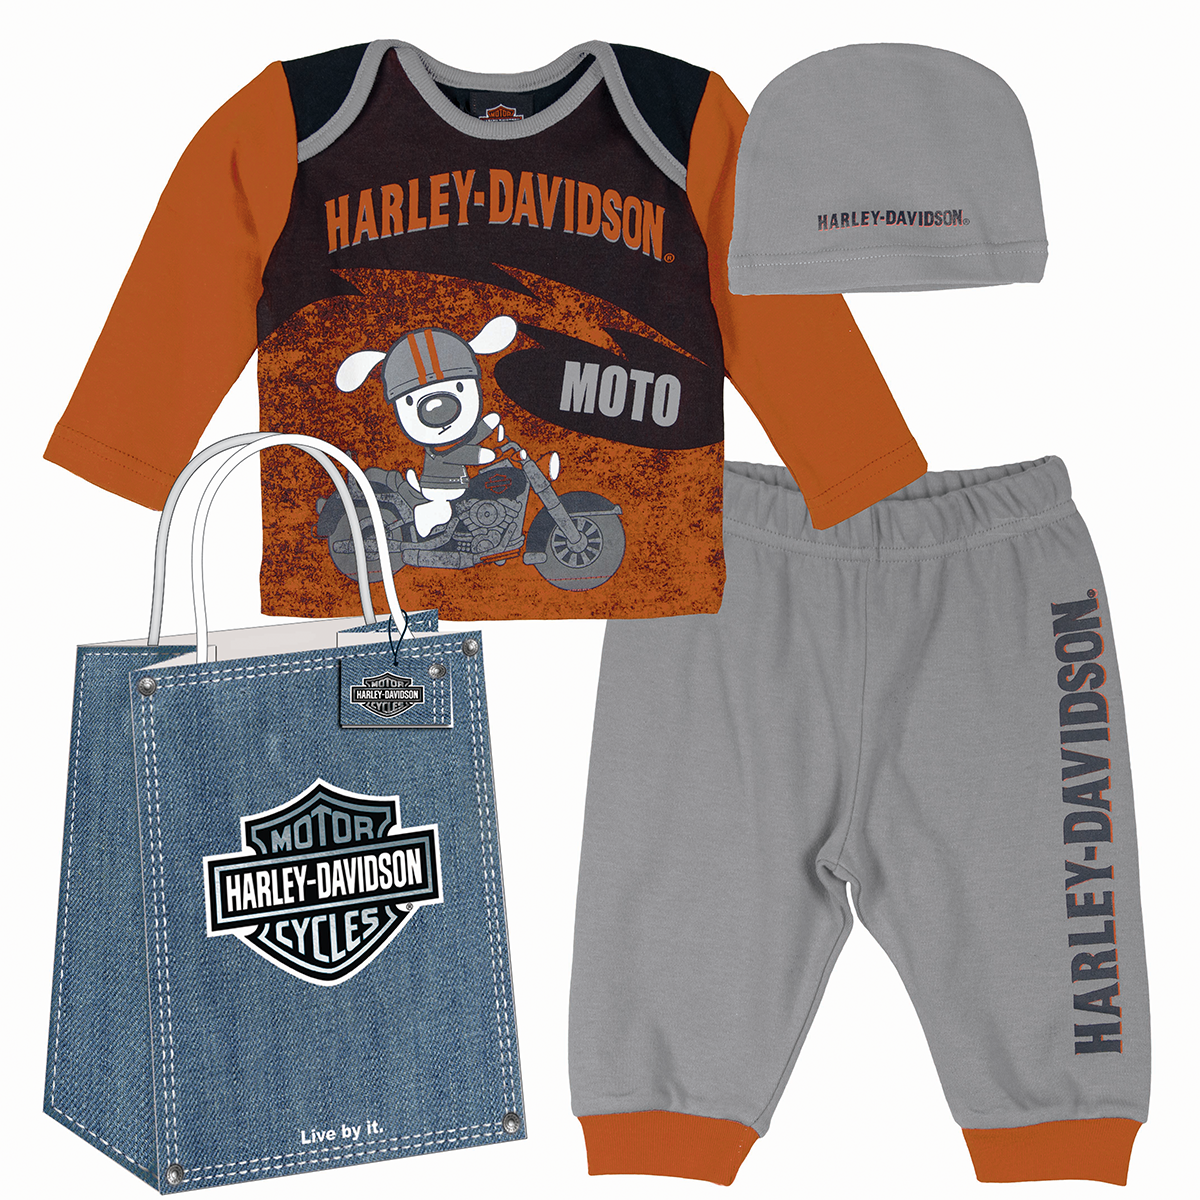  Adventure Harley Davidson New Kids Clothes 